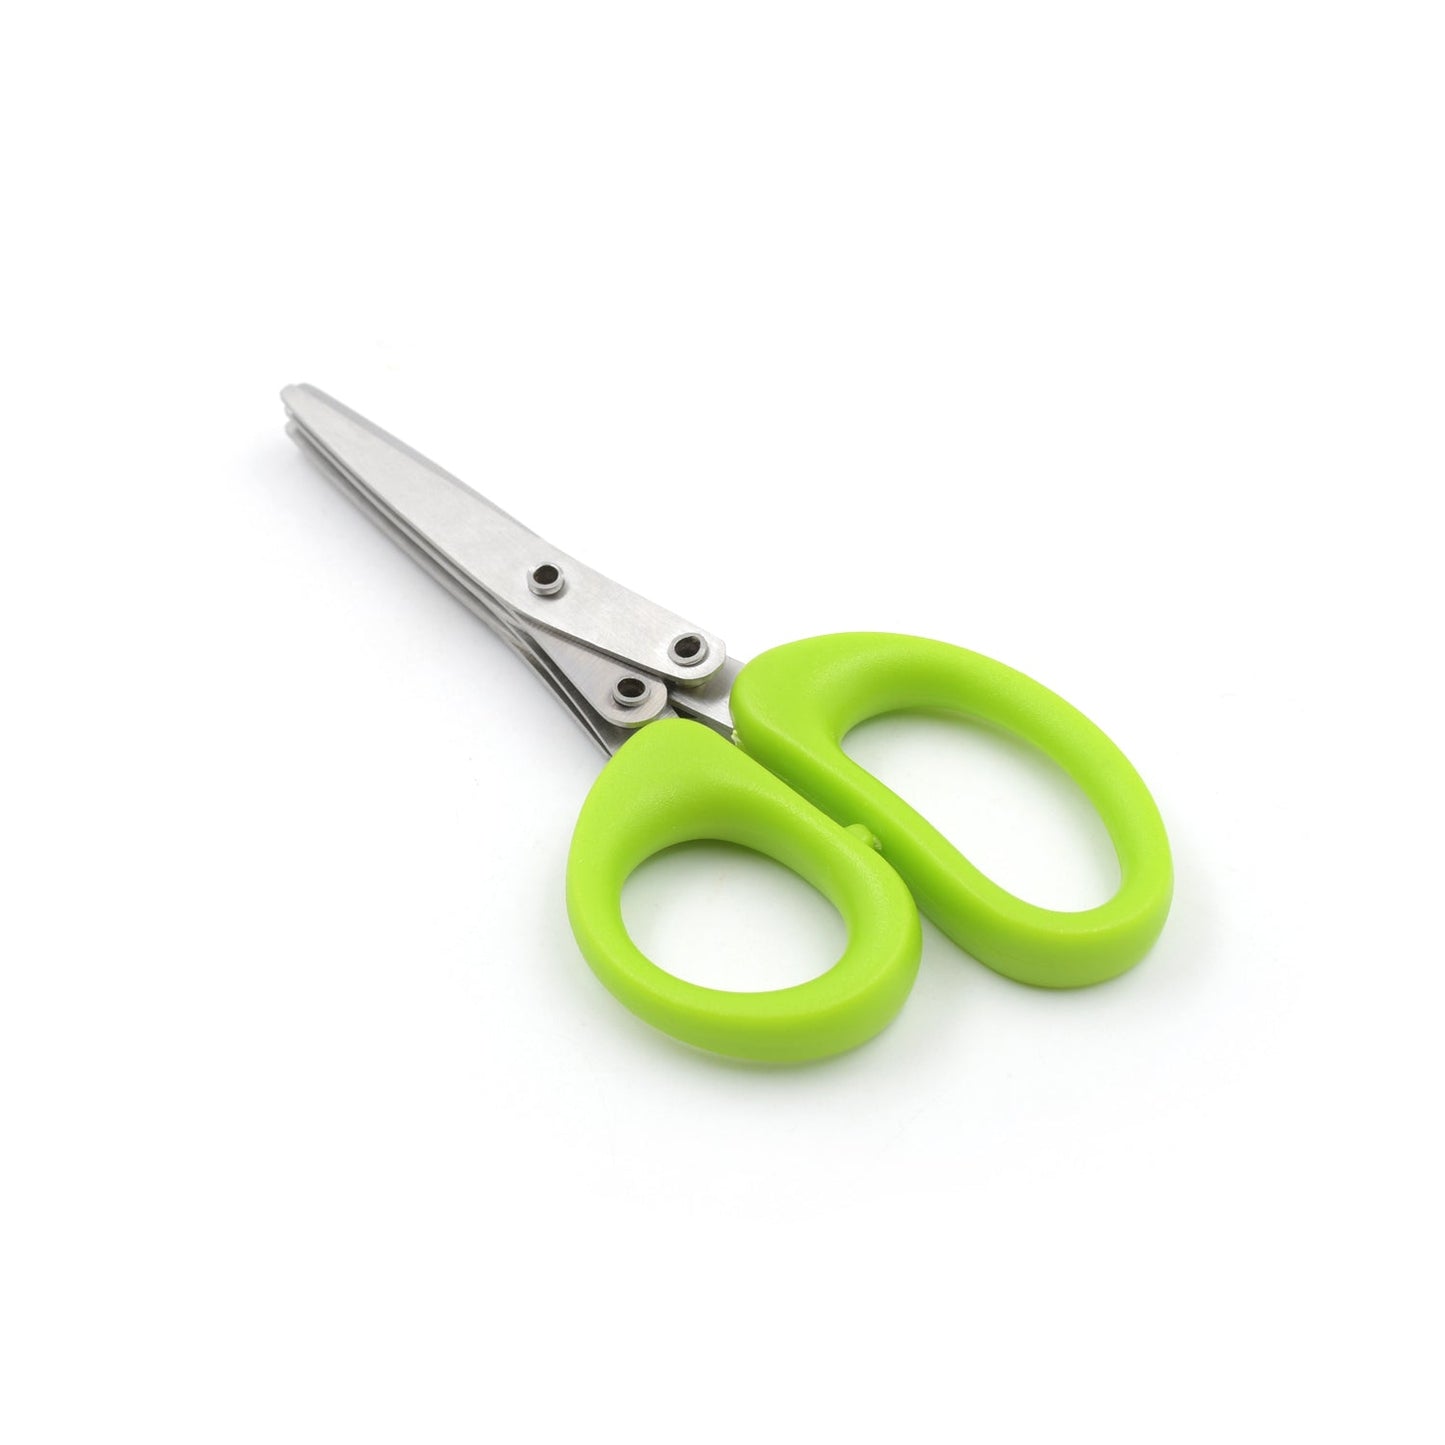 1564 Multifunction Vegetable Stainless Steel Herbs Scissor with 3 Blades